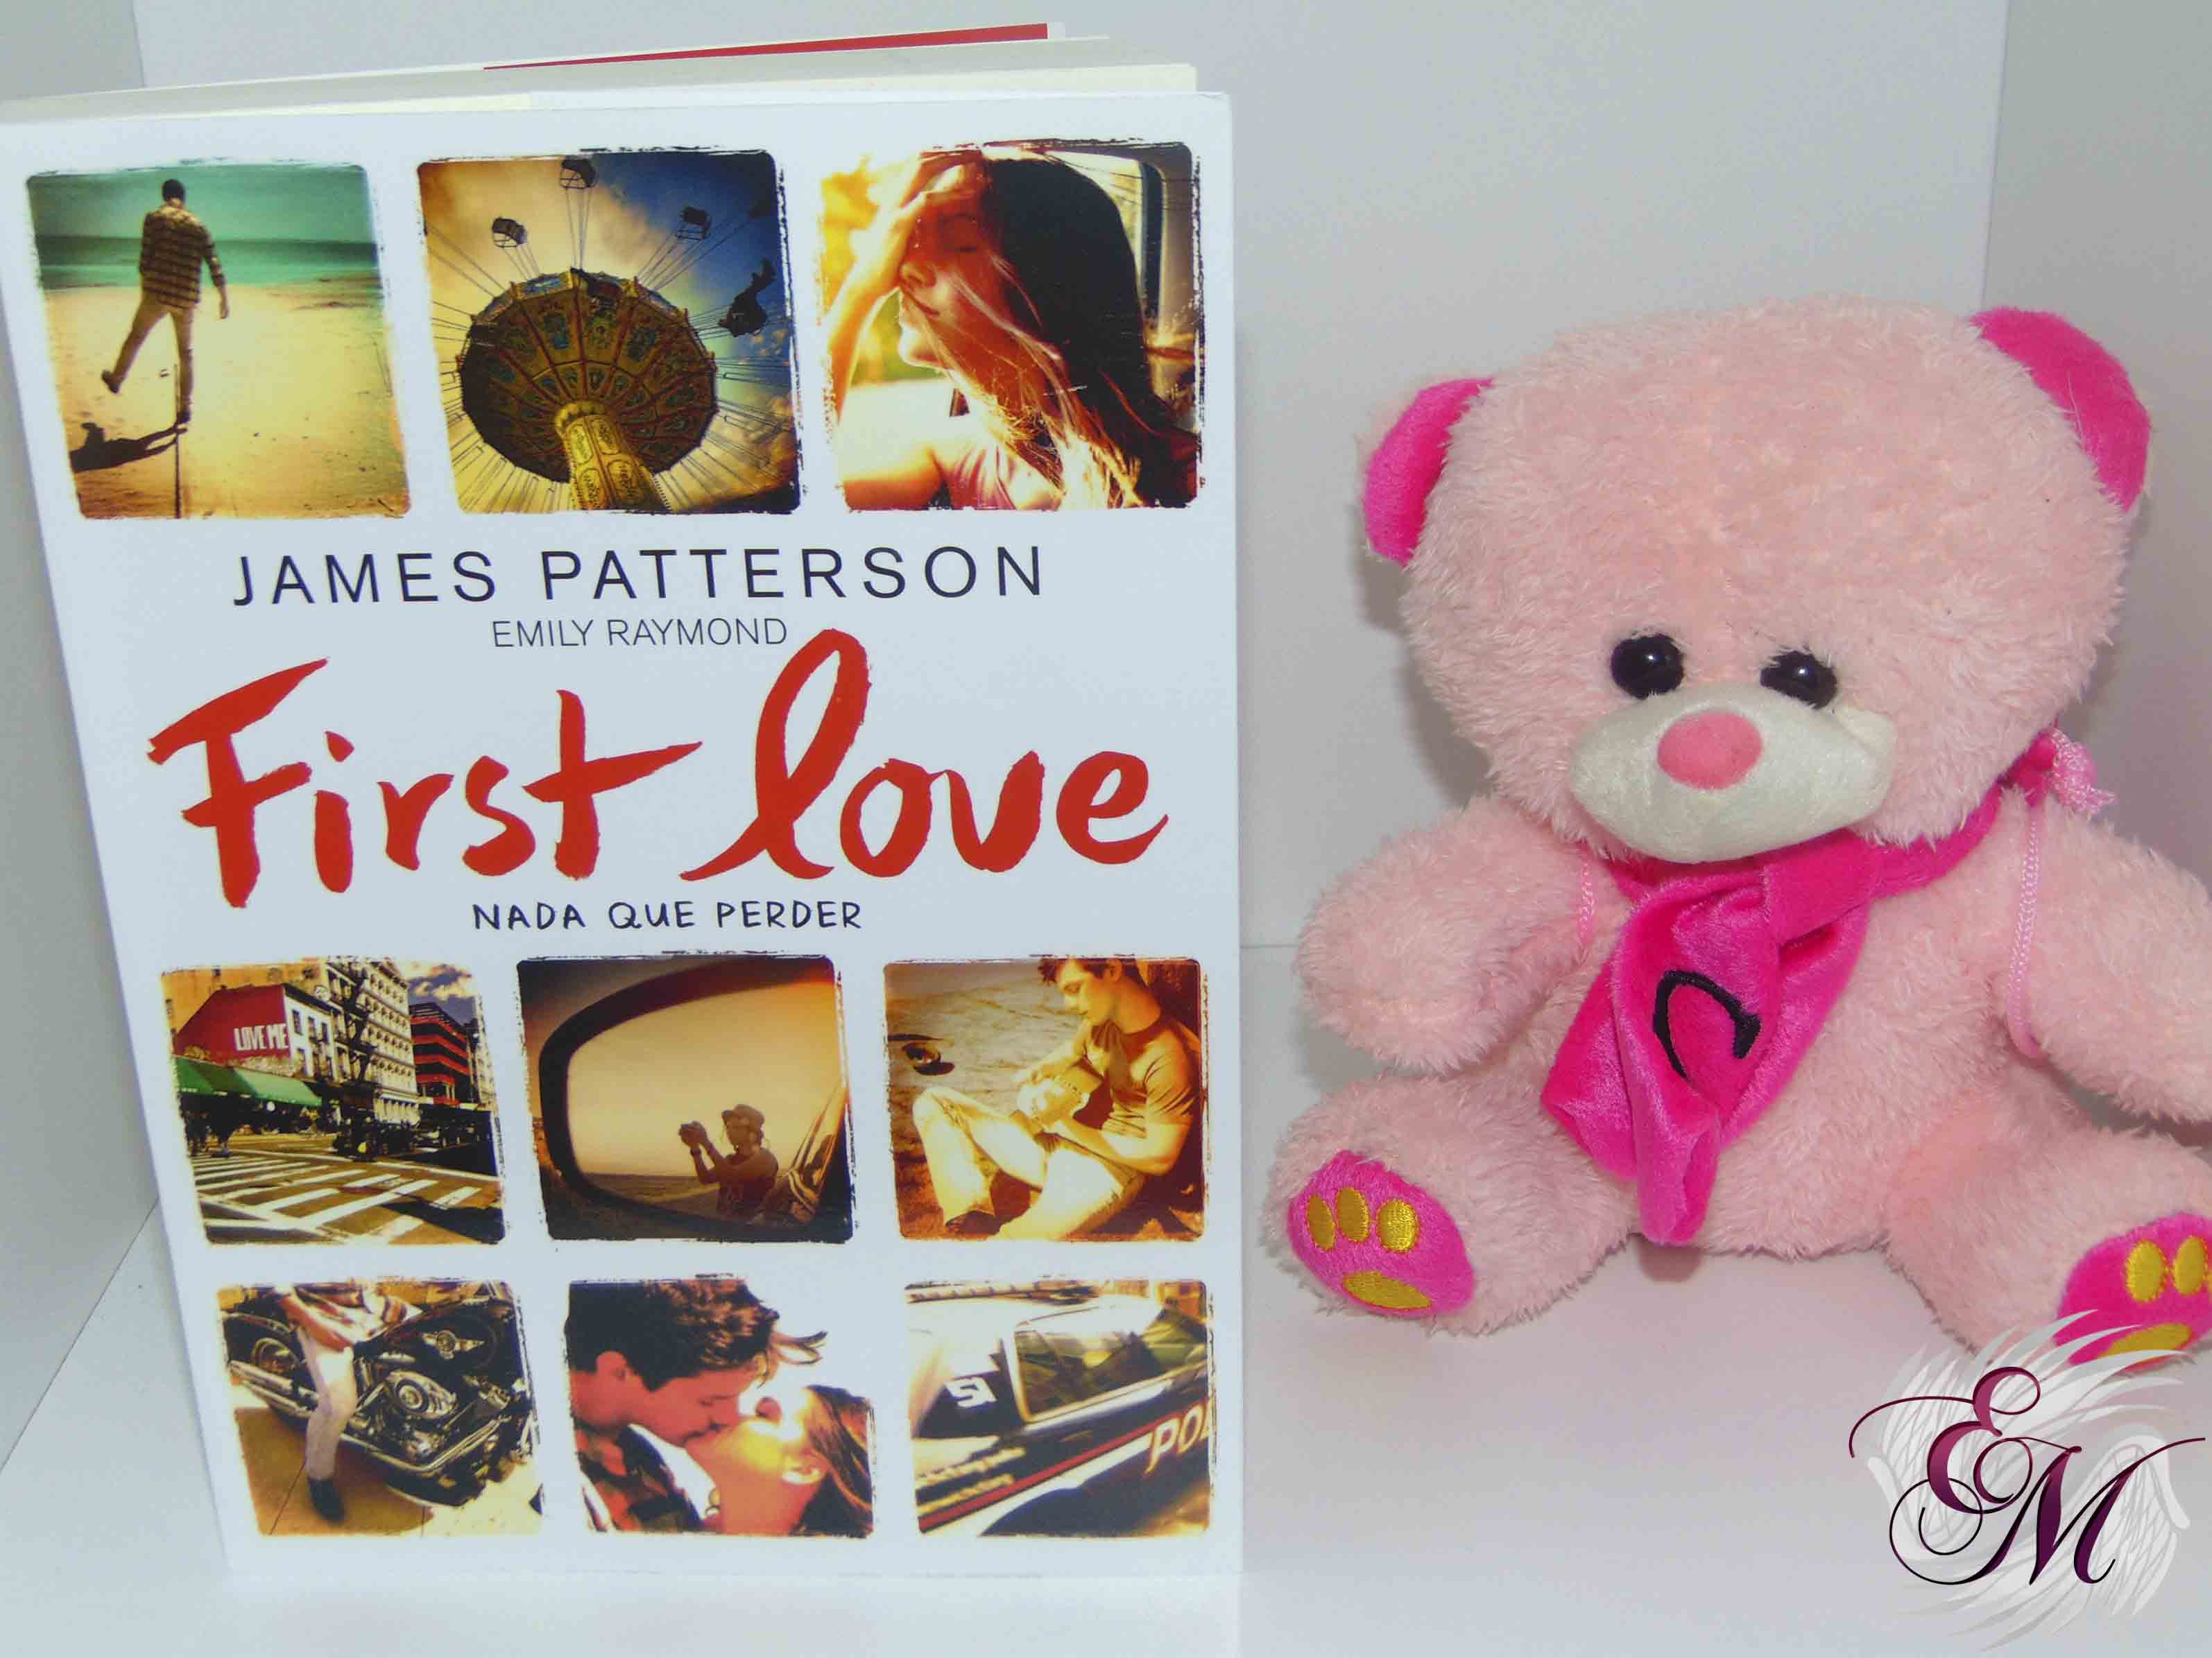 First love, de James Patterson/Emily Raymond - Reseña